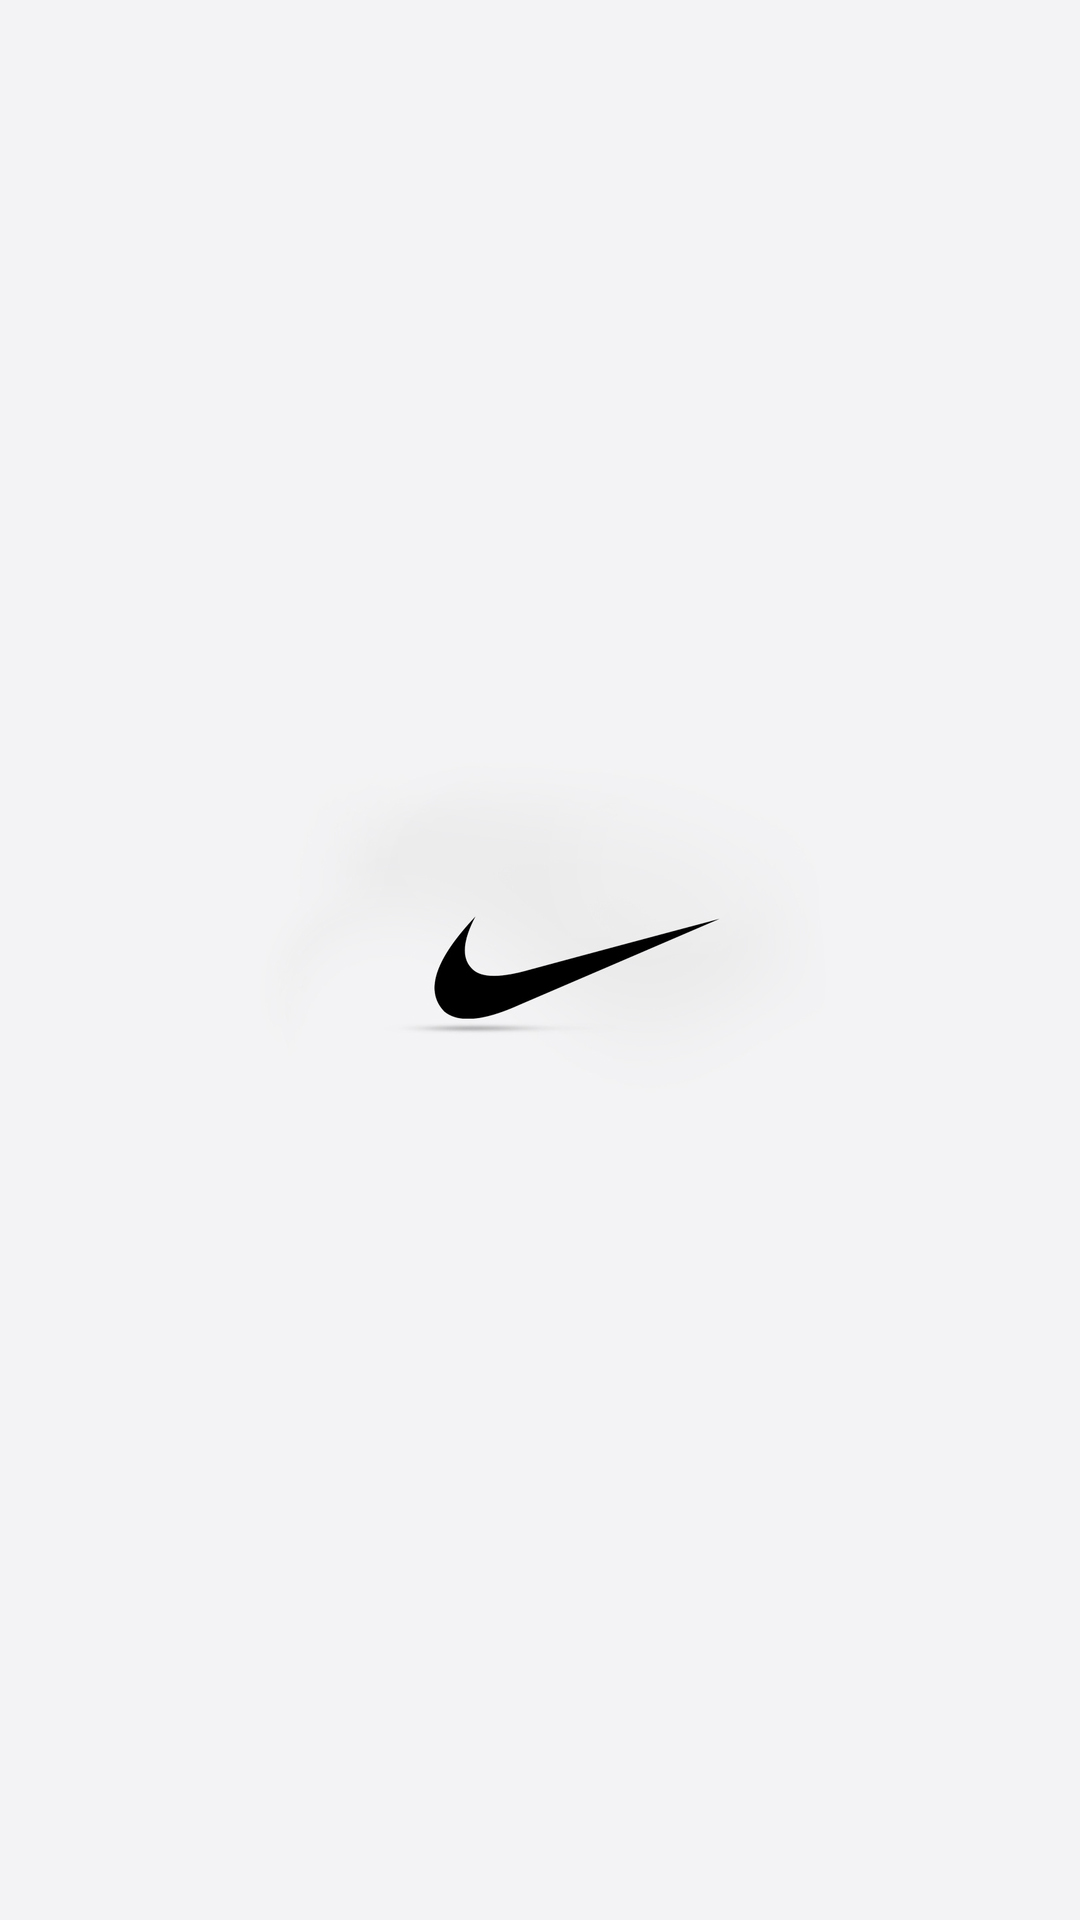 Nike Logo Wallpaper iPhone